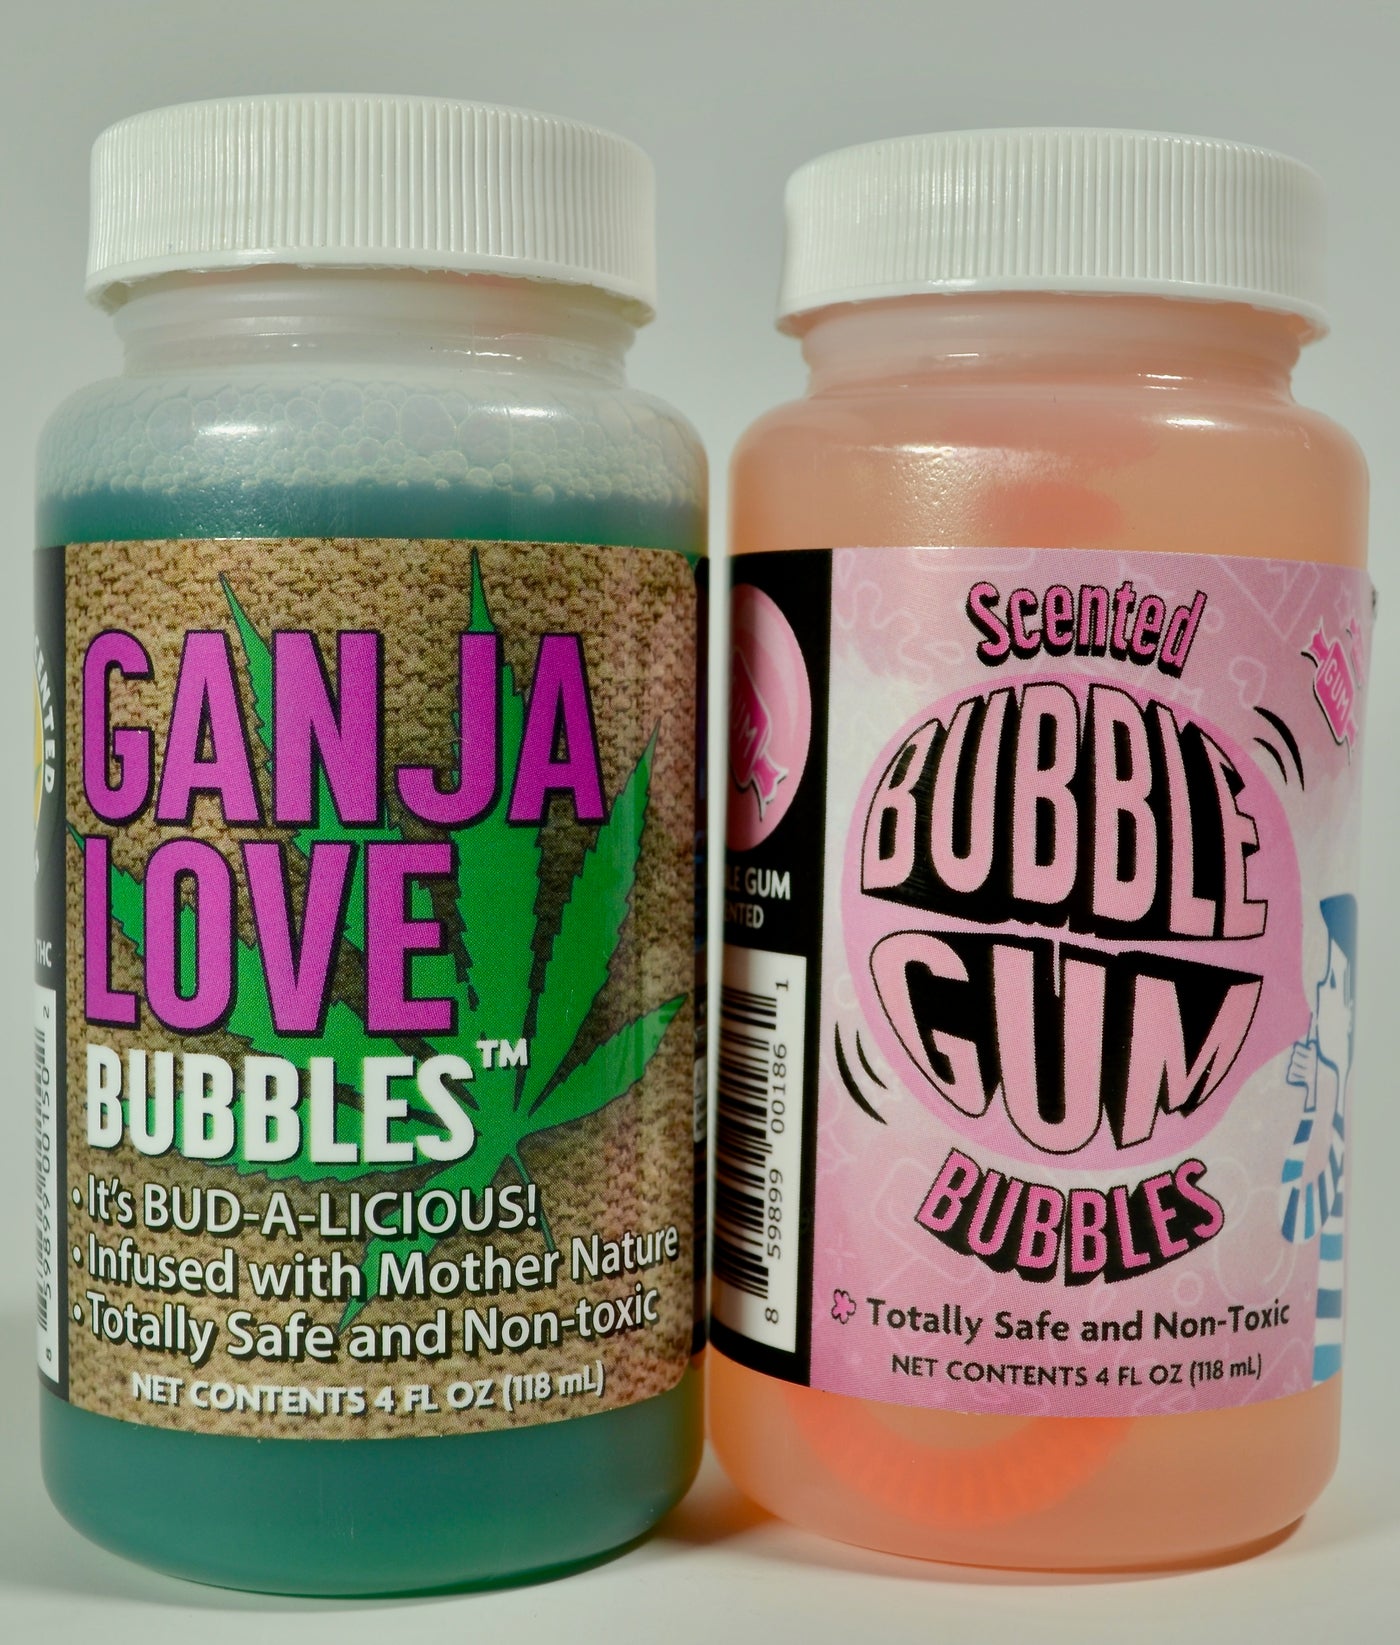 Scented Bubbles